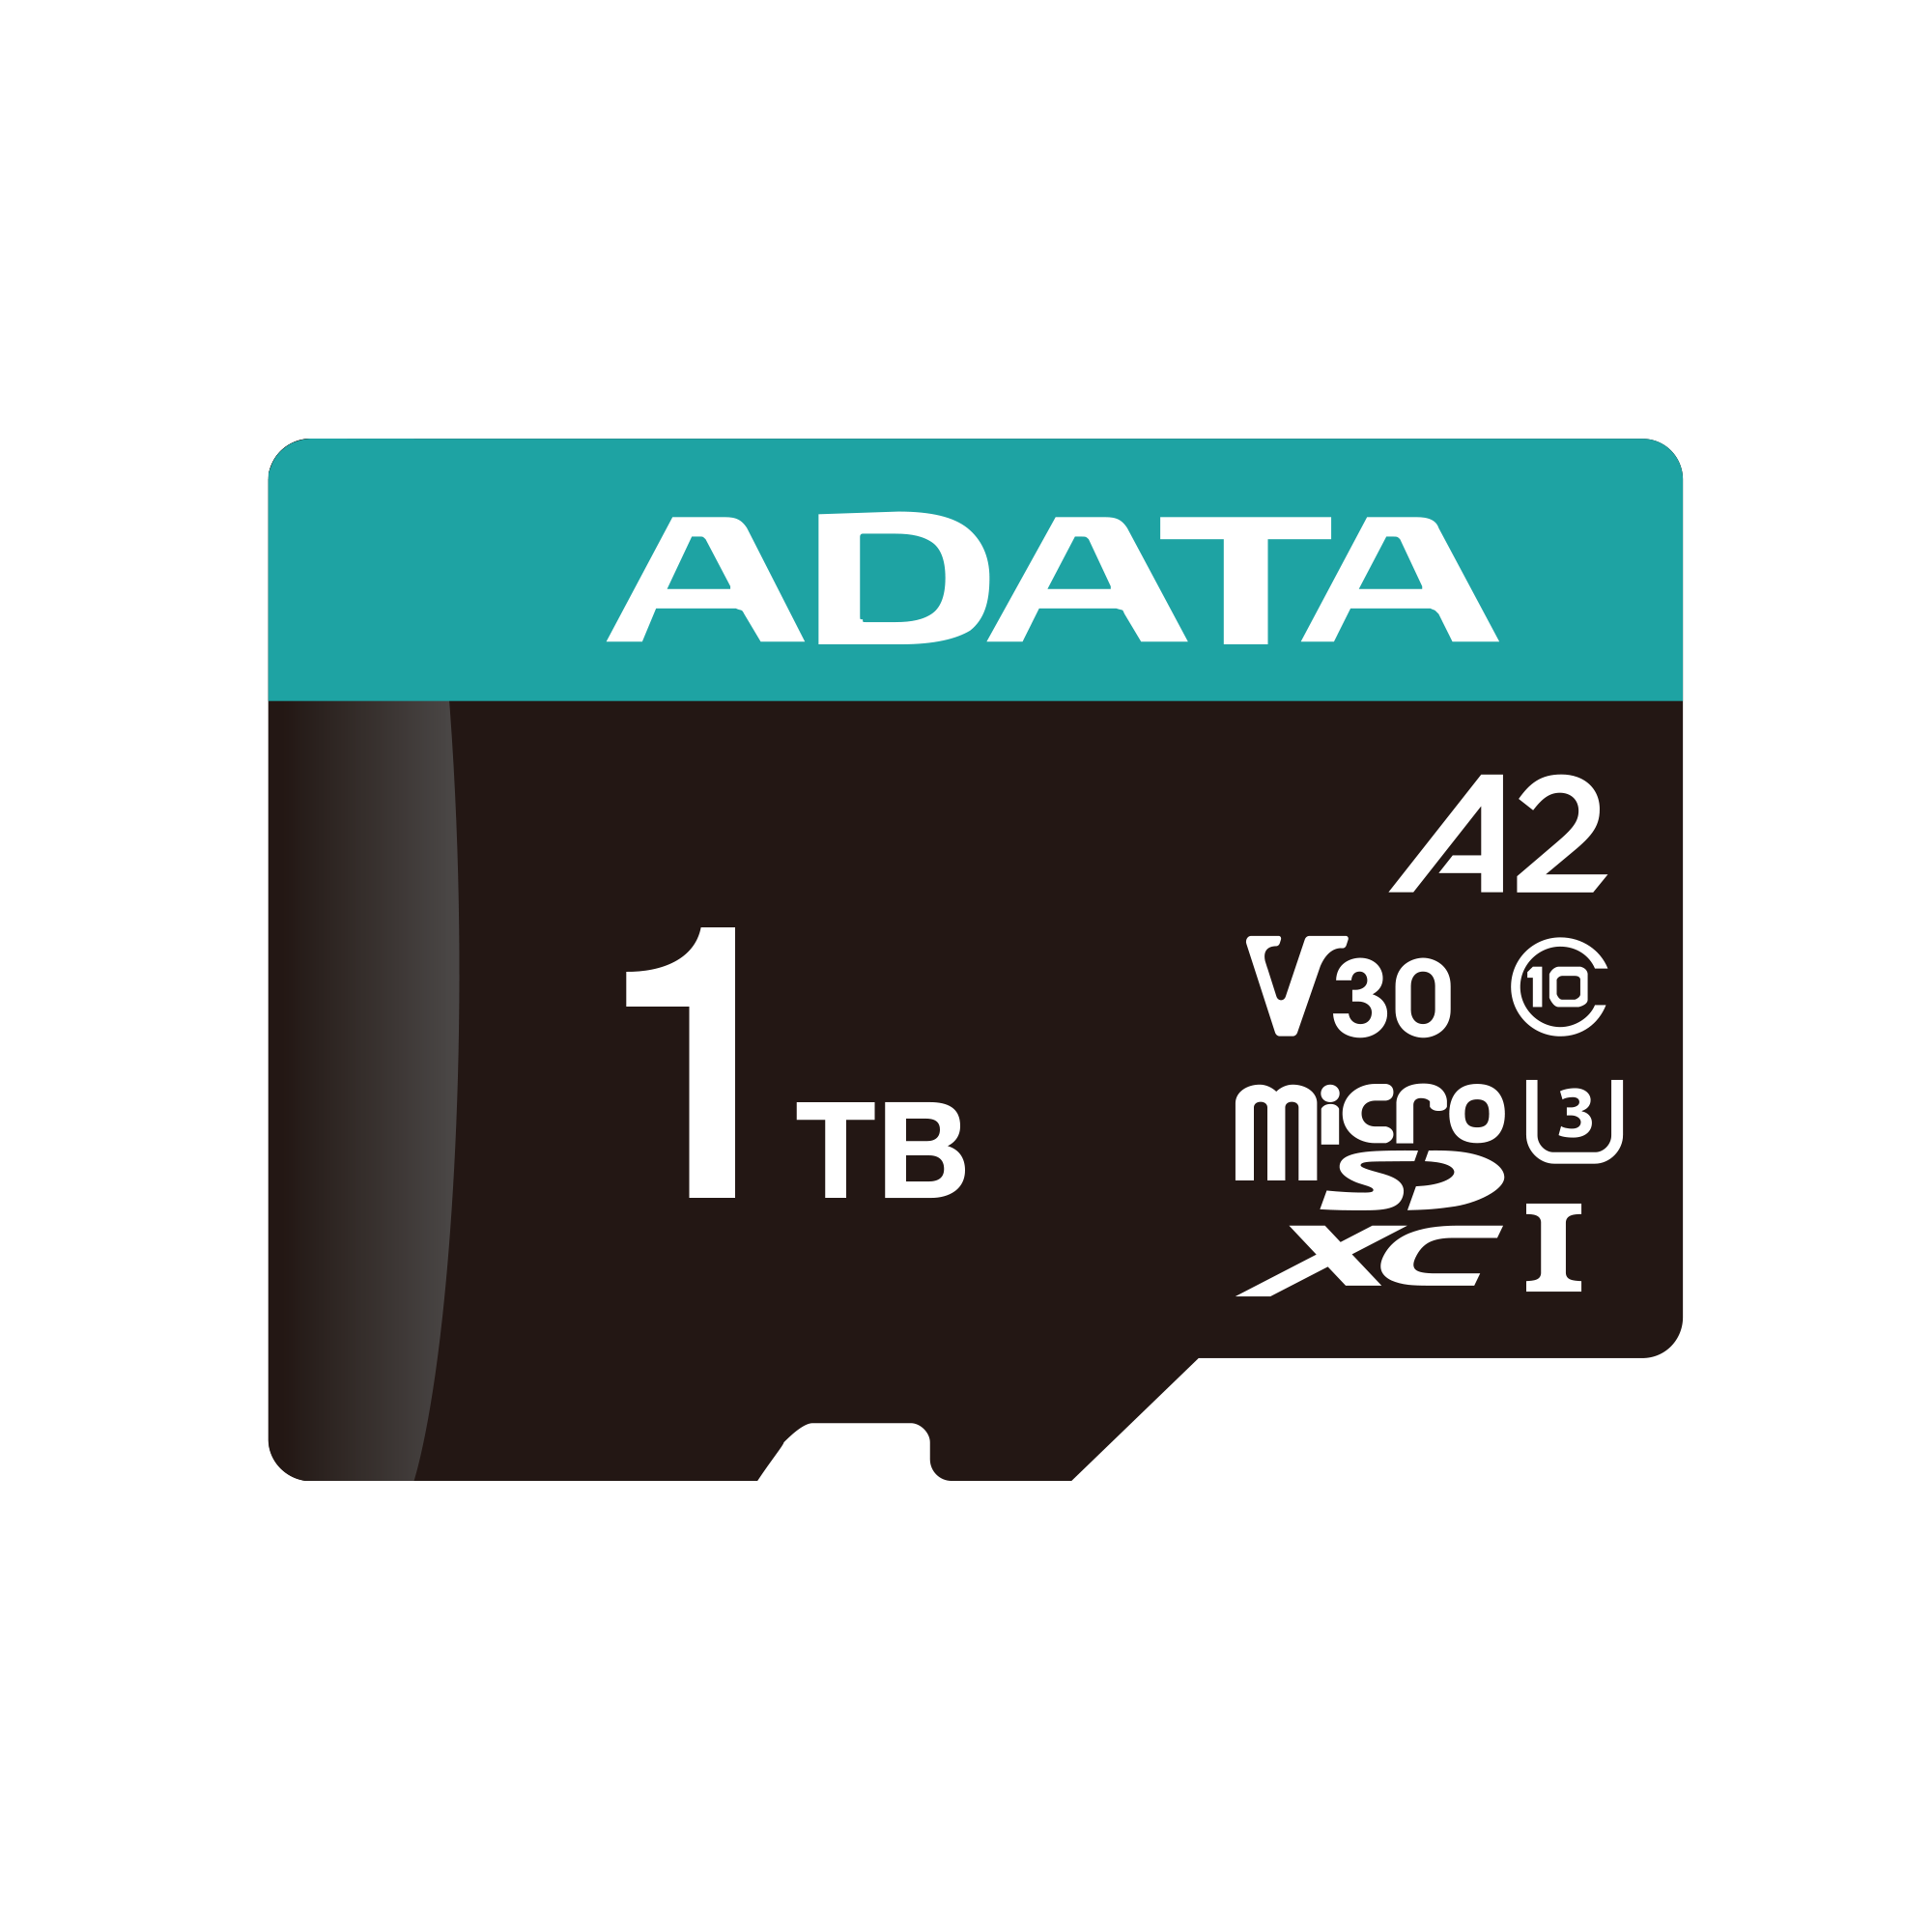 Memoria Micro SD 256GB / ADATA / 100MB/S / CLASE 10 / - Venprotech